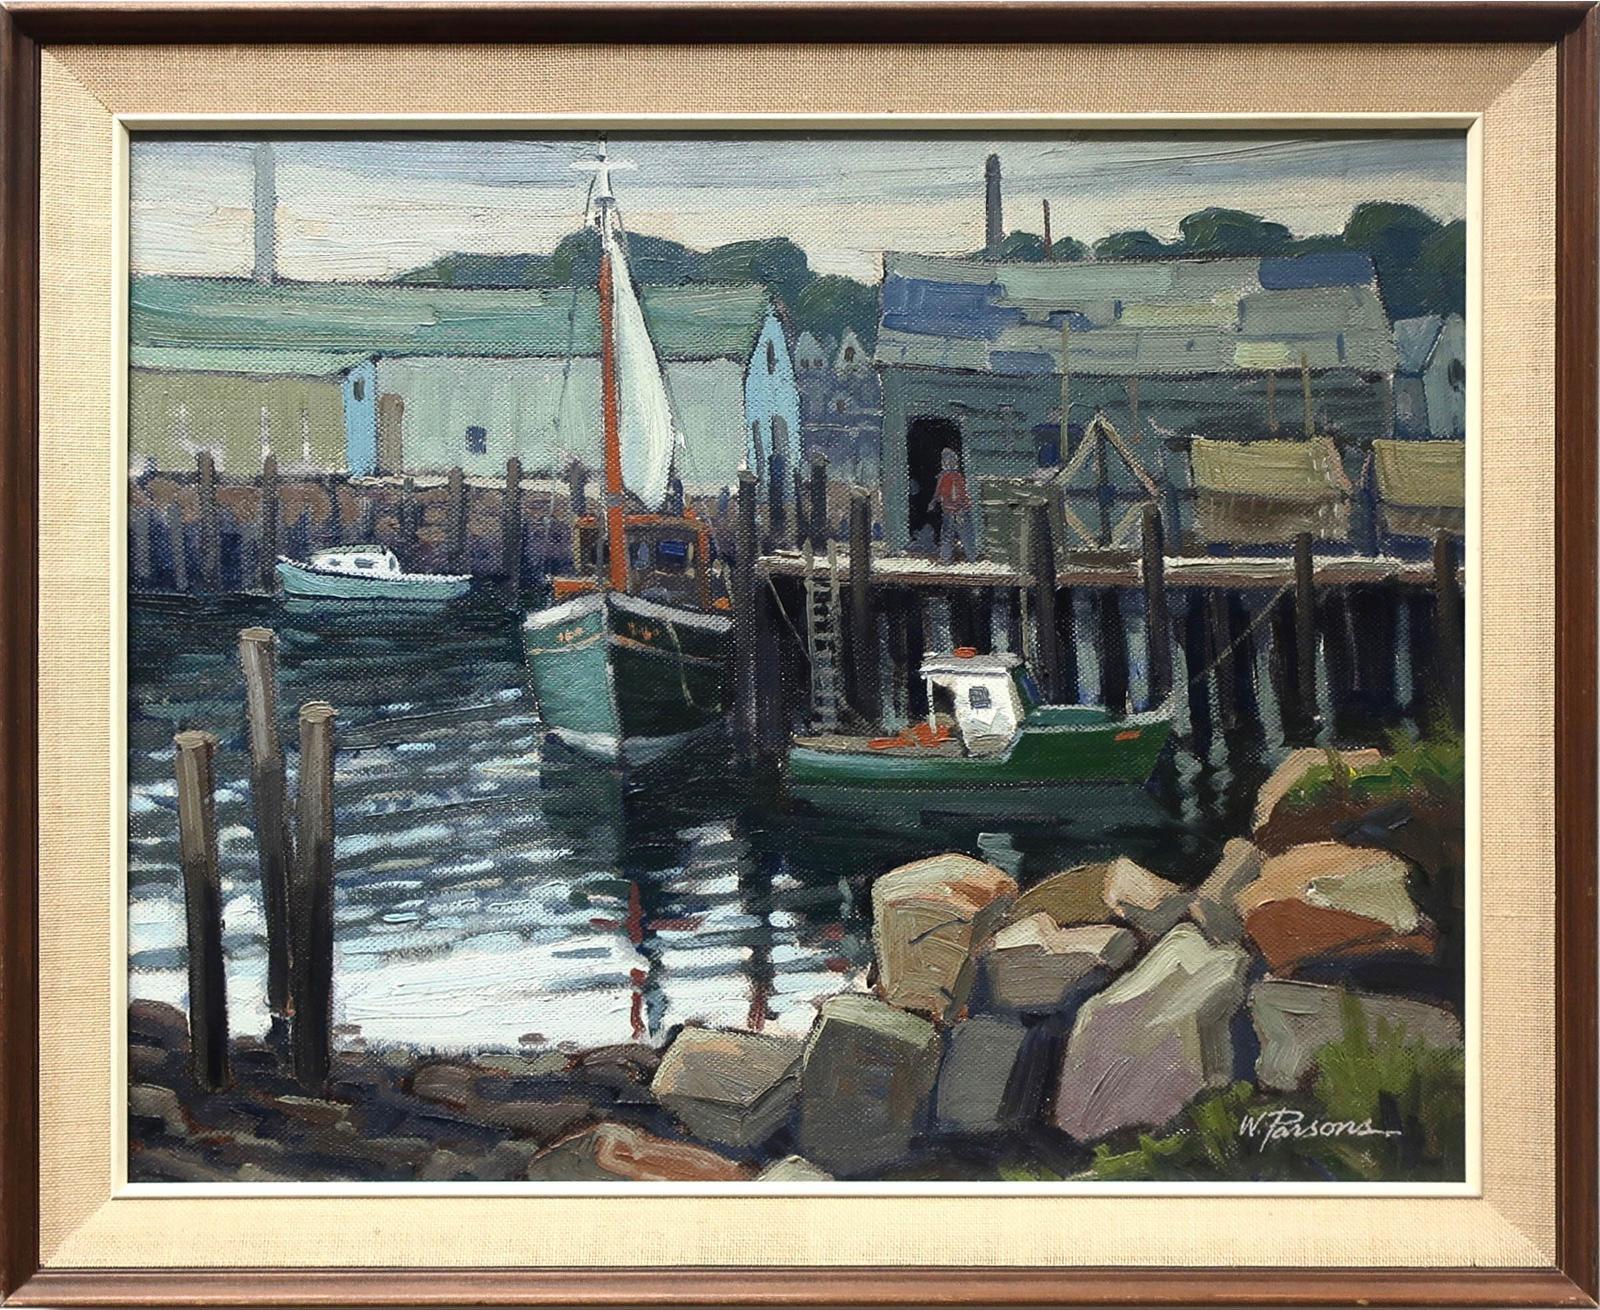 William (Bill) Parsons (1909-1982) - Arnold's Wharf - Gloucester, Cape Ann